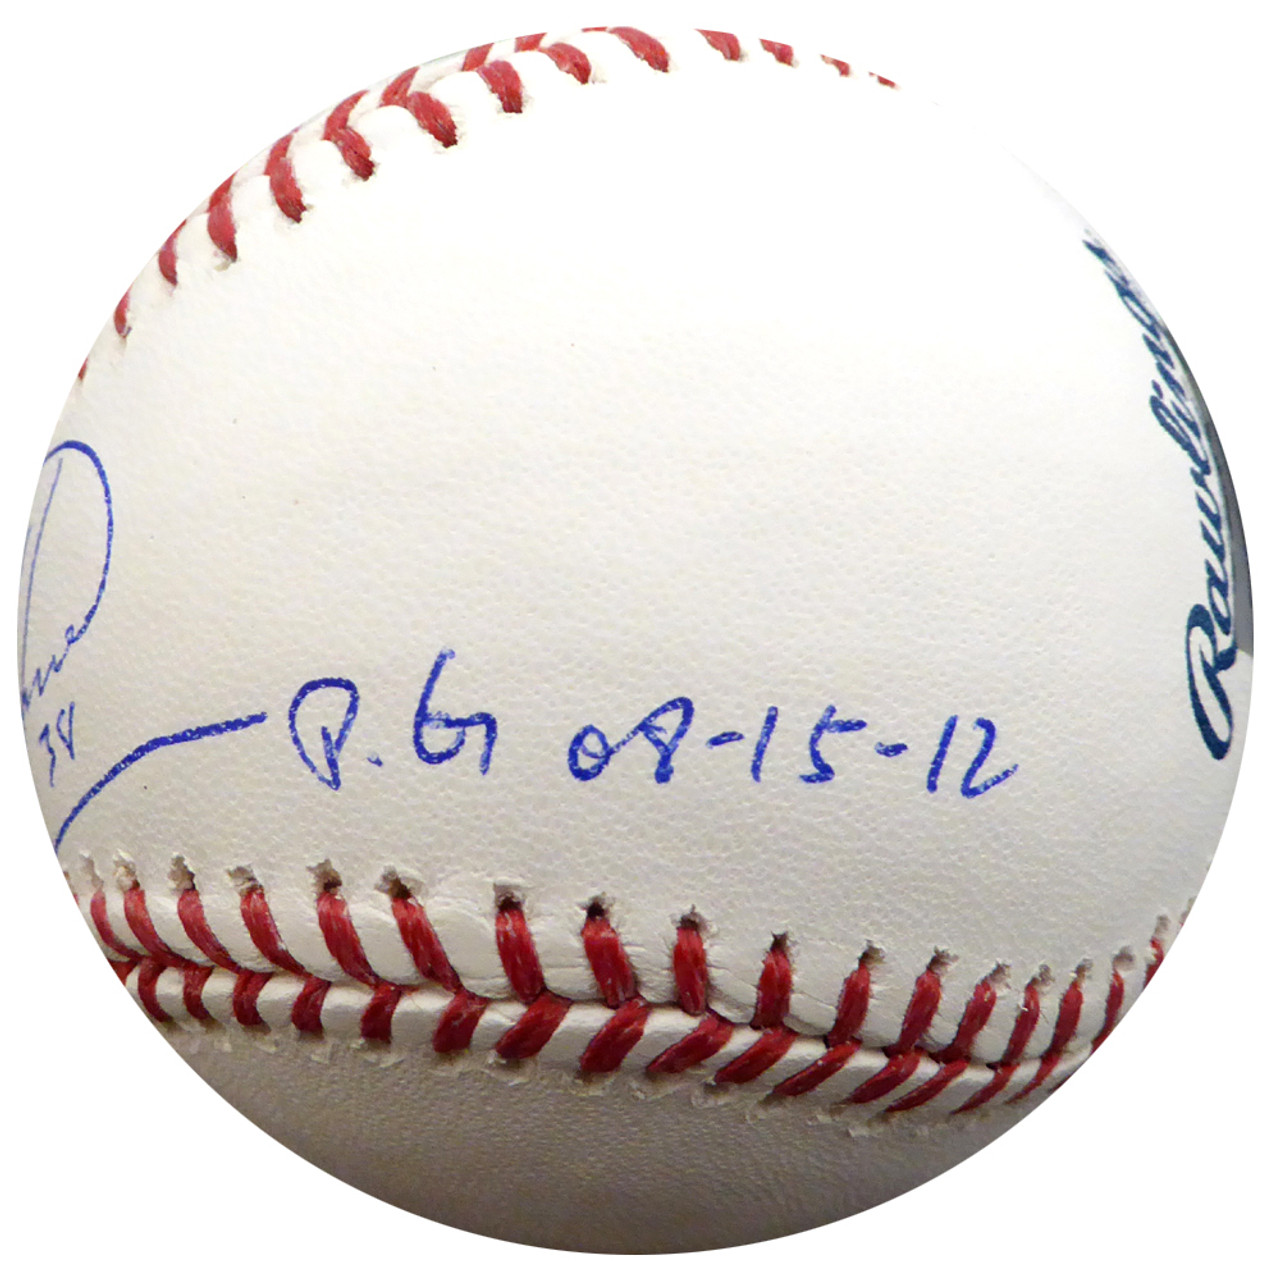 Felix Hernandez Autographed Official MLB Baseball Seattle Mariners